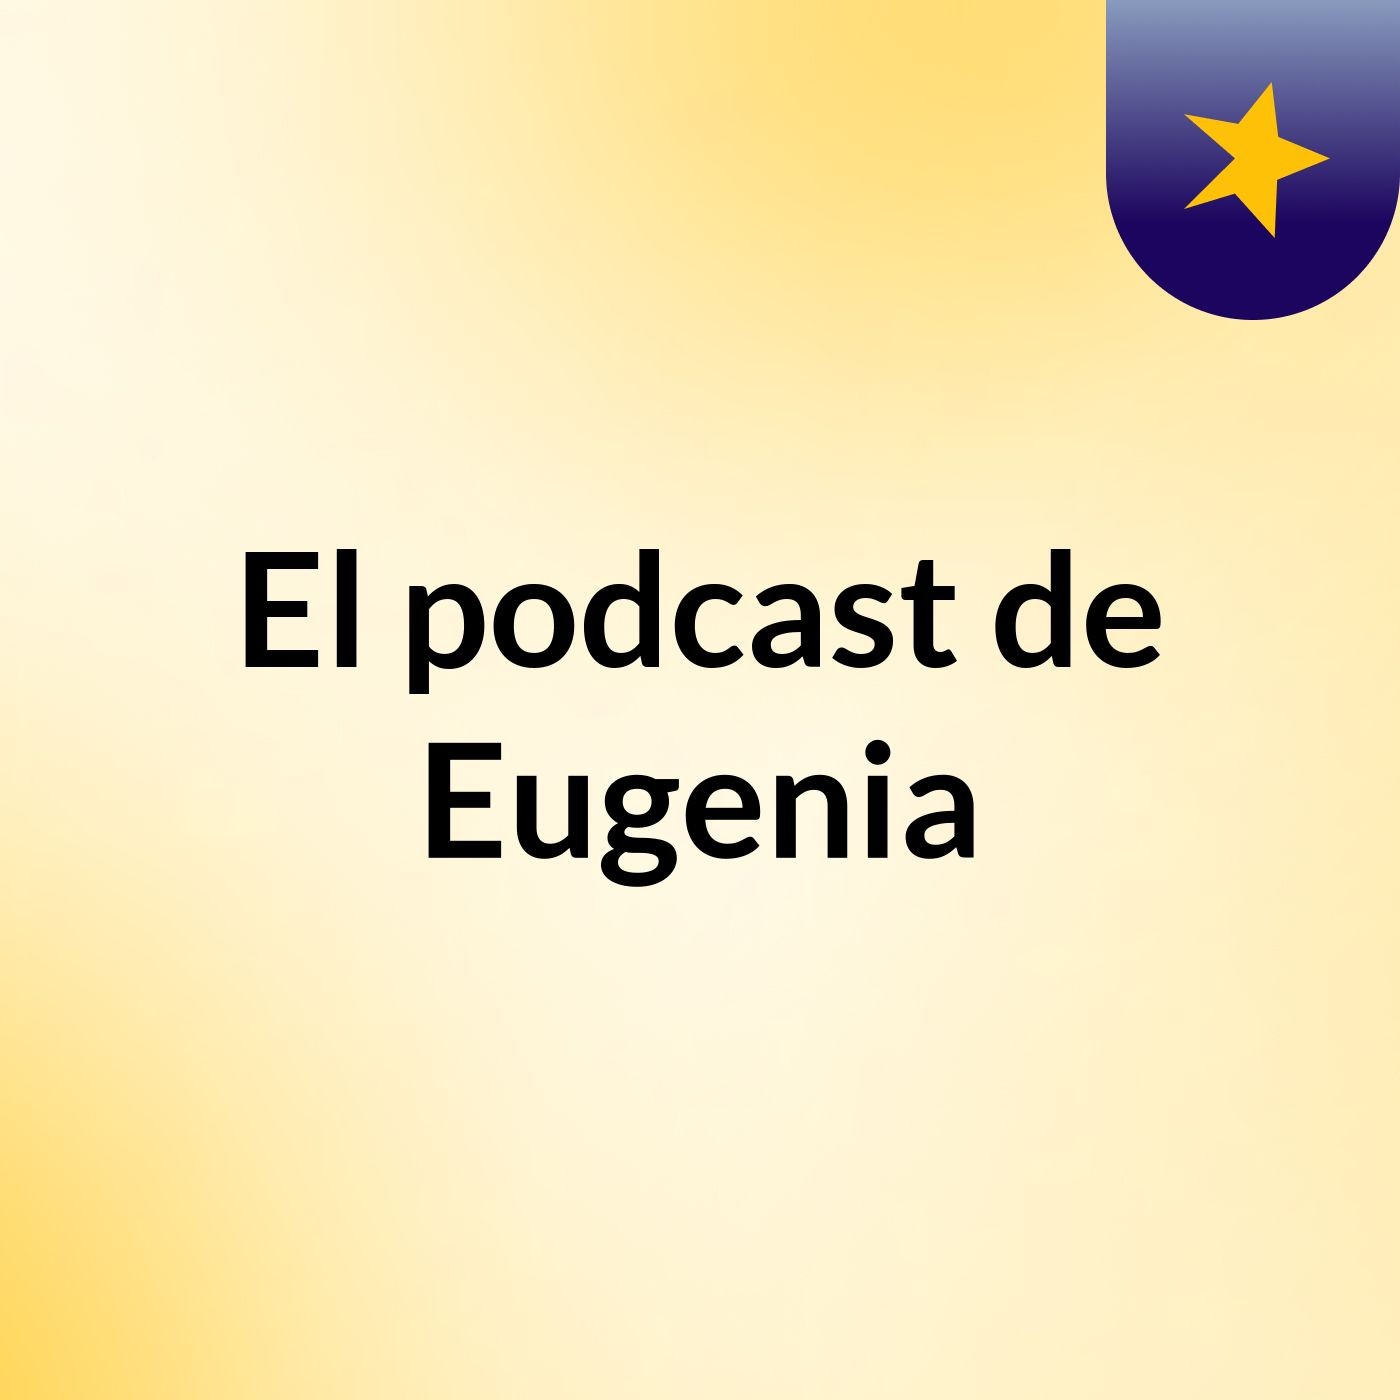 El podcast de Eugenia